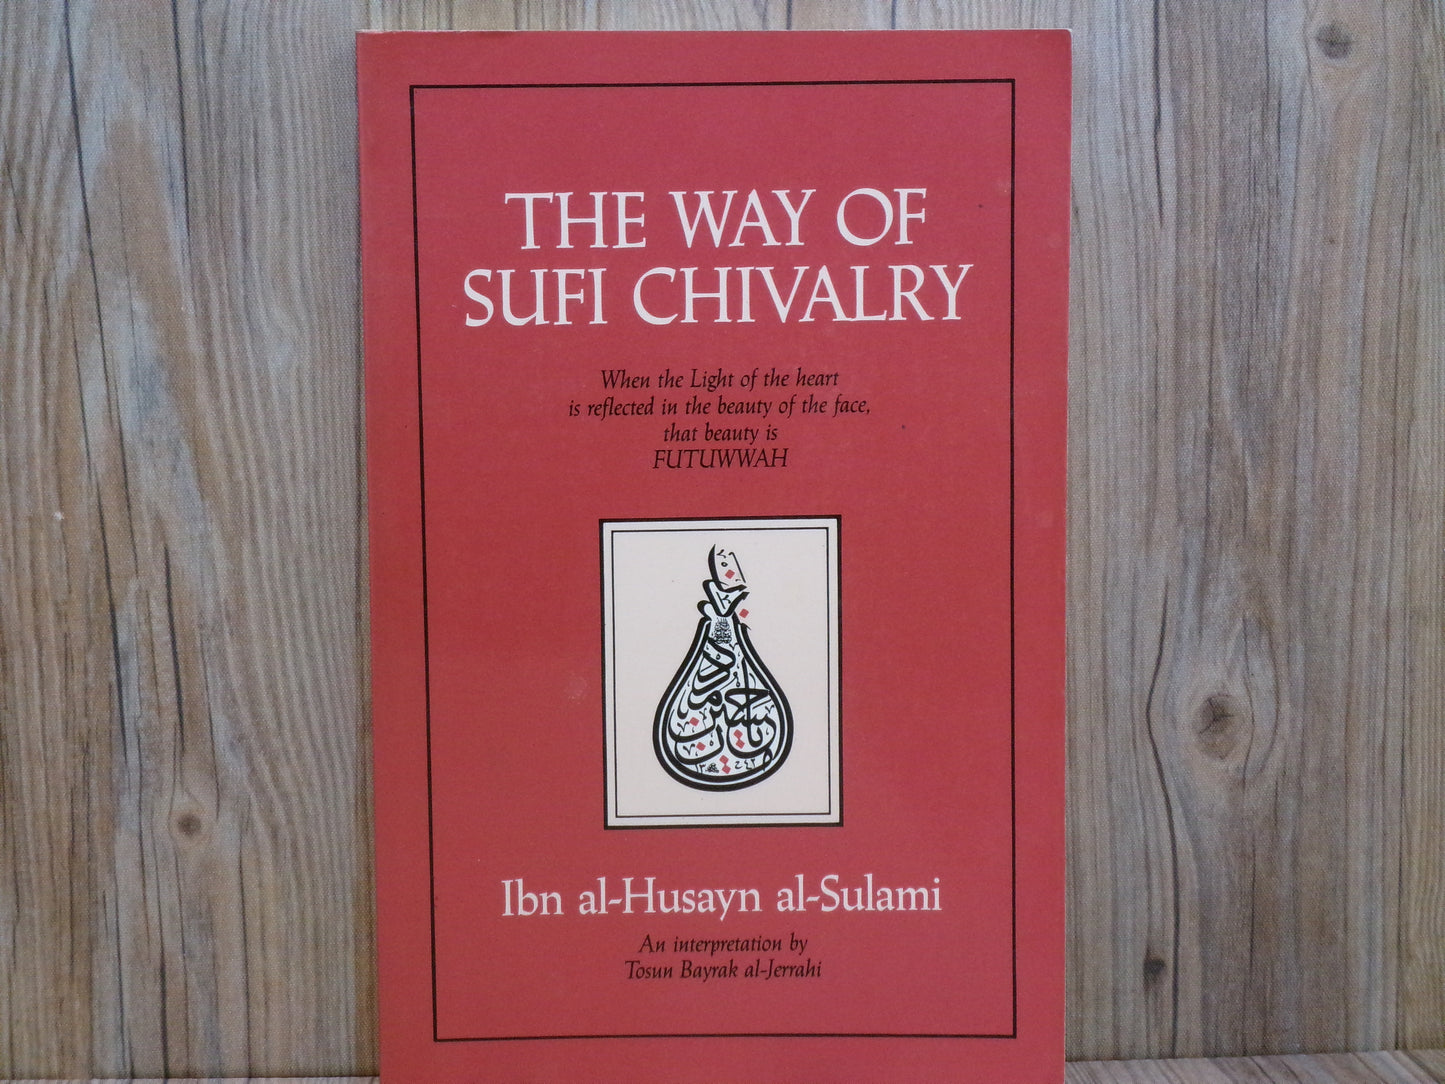 The Way of Sufi Chivalry by Ibn al-Husayn al-Sulami